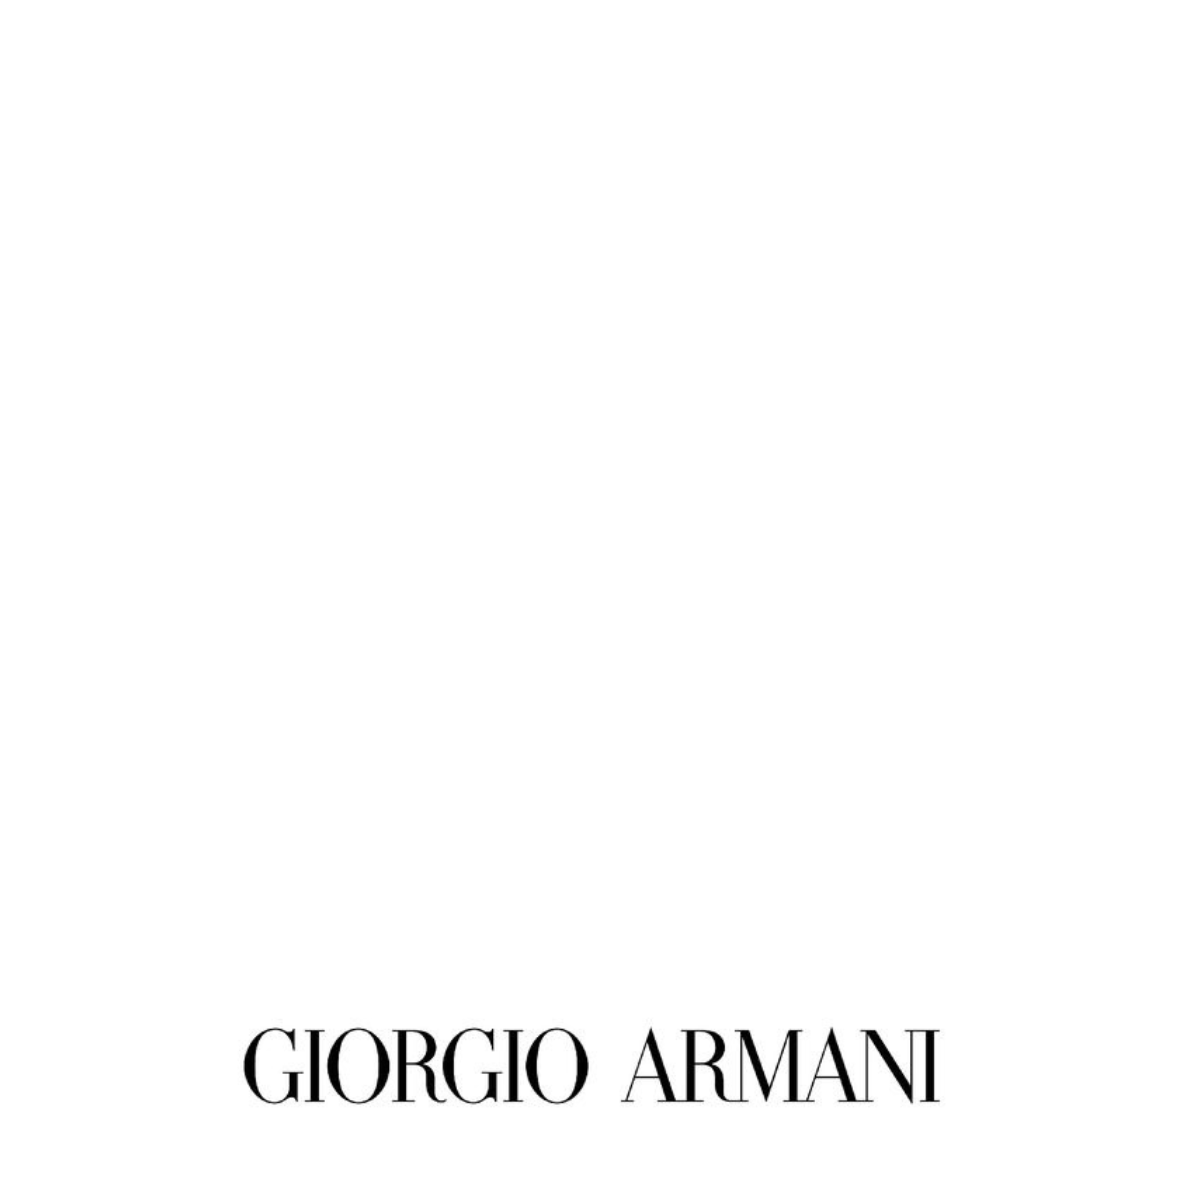 Giorgio Armani man – Suit Negozi Eu